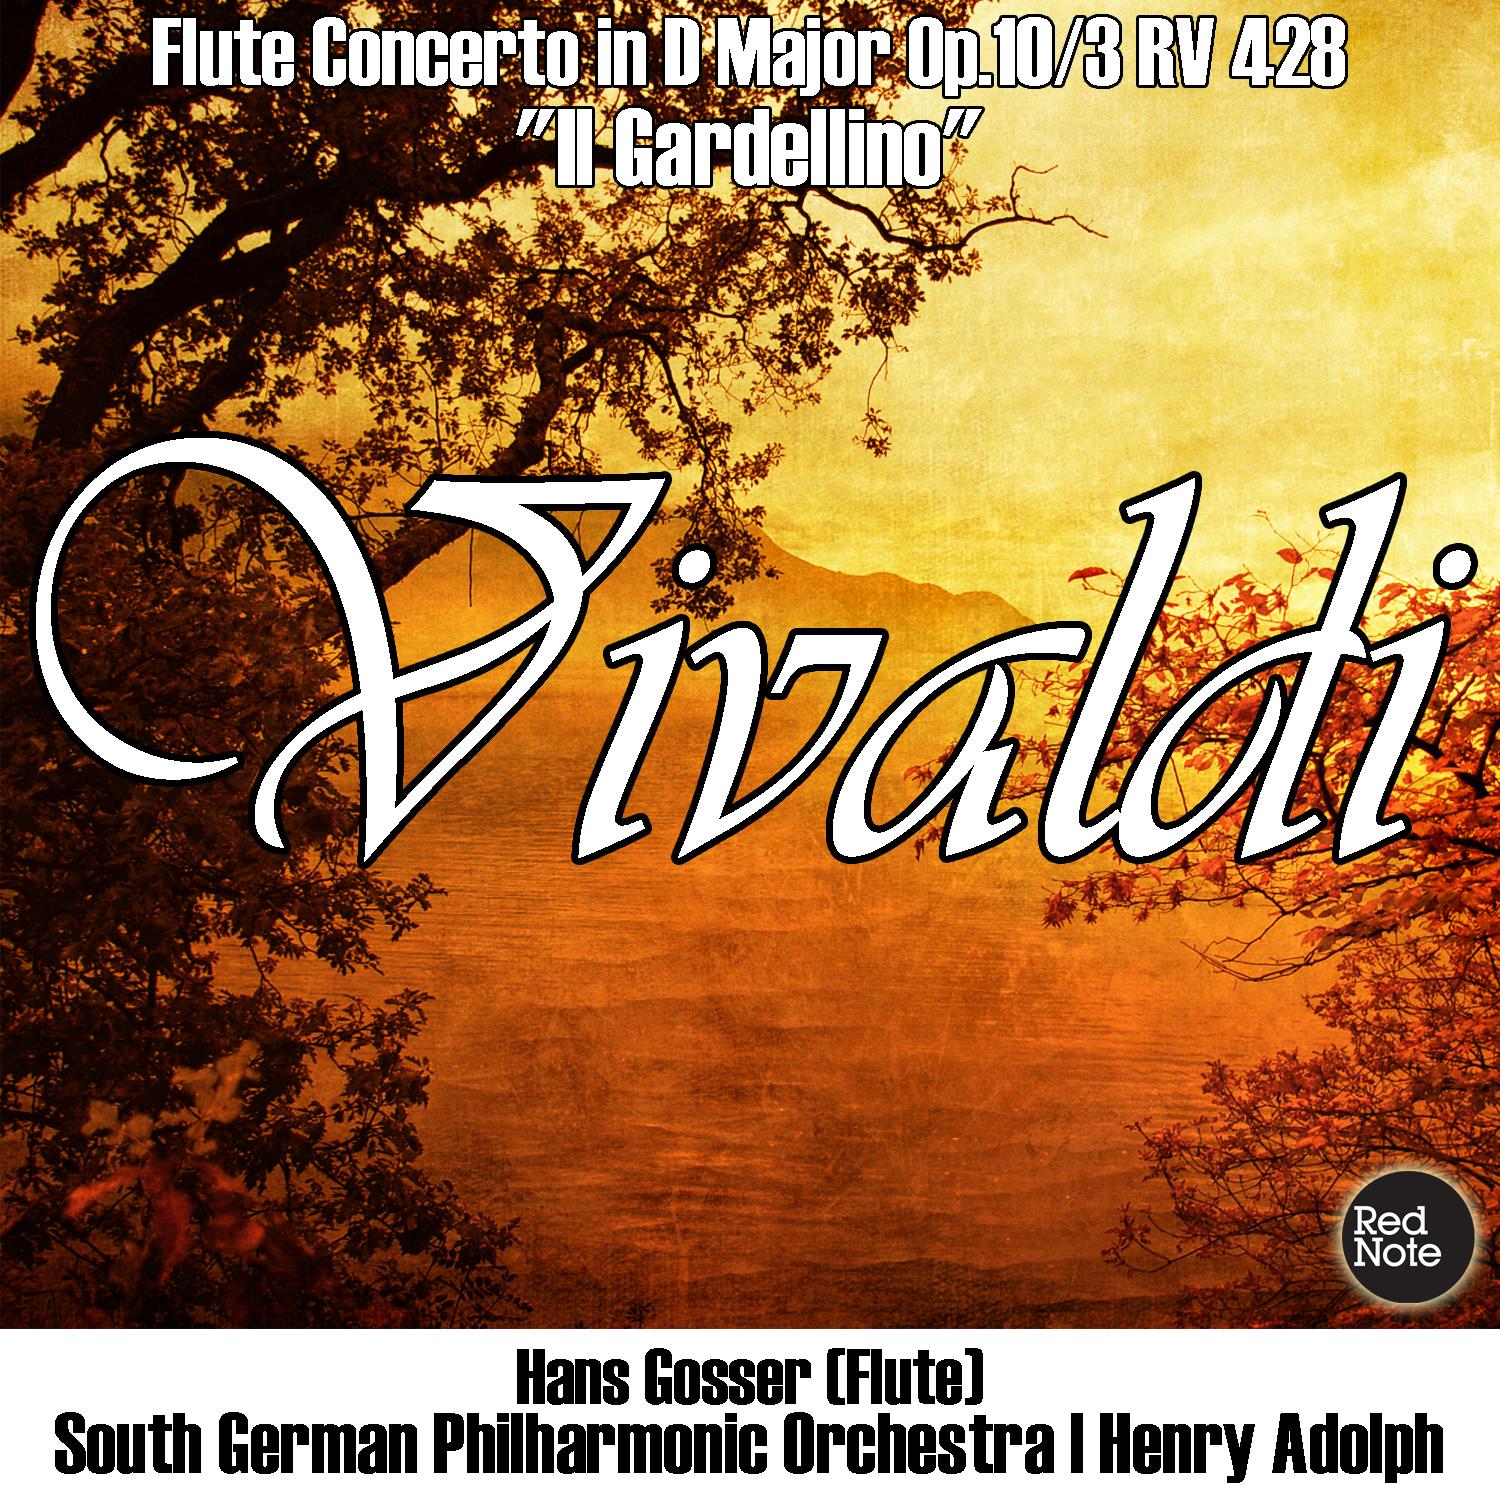 Flute Concerto "Il Gardellino" in D Major, RV 428 / Op.10/3: II. Largo